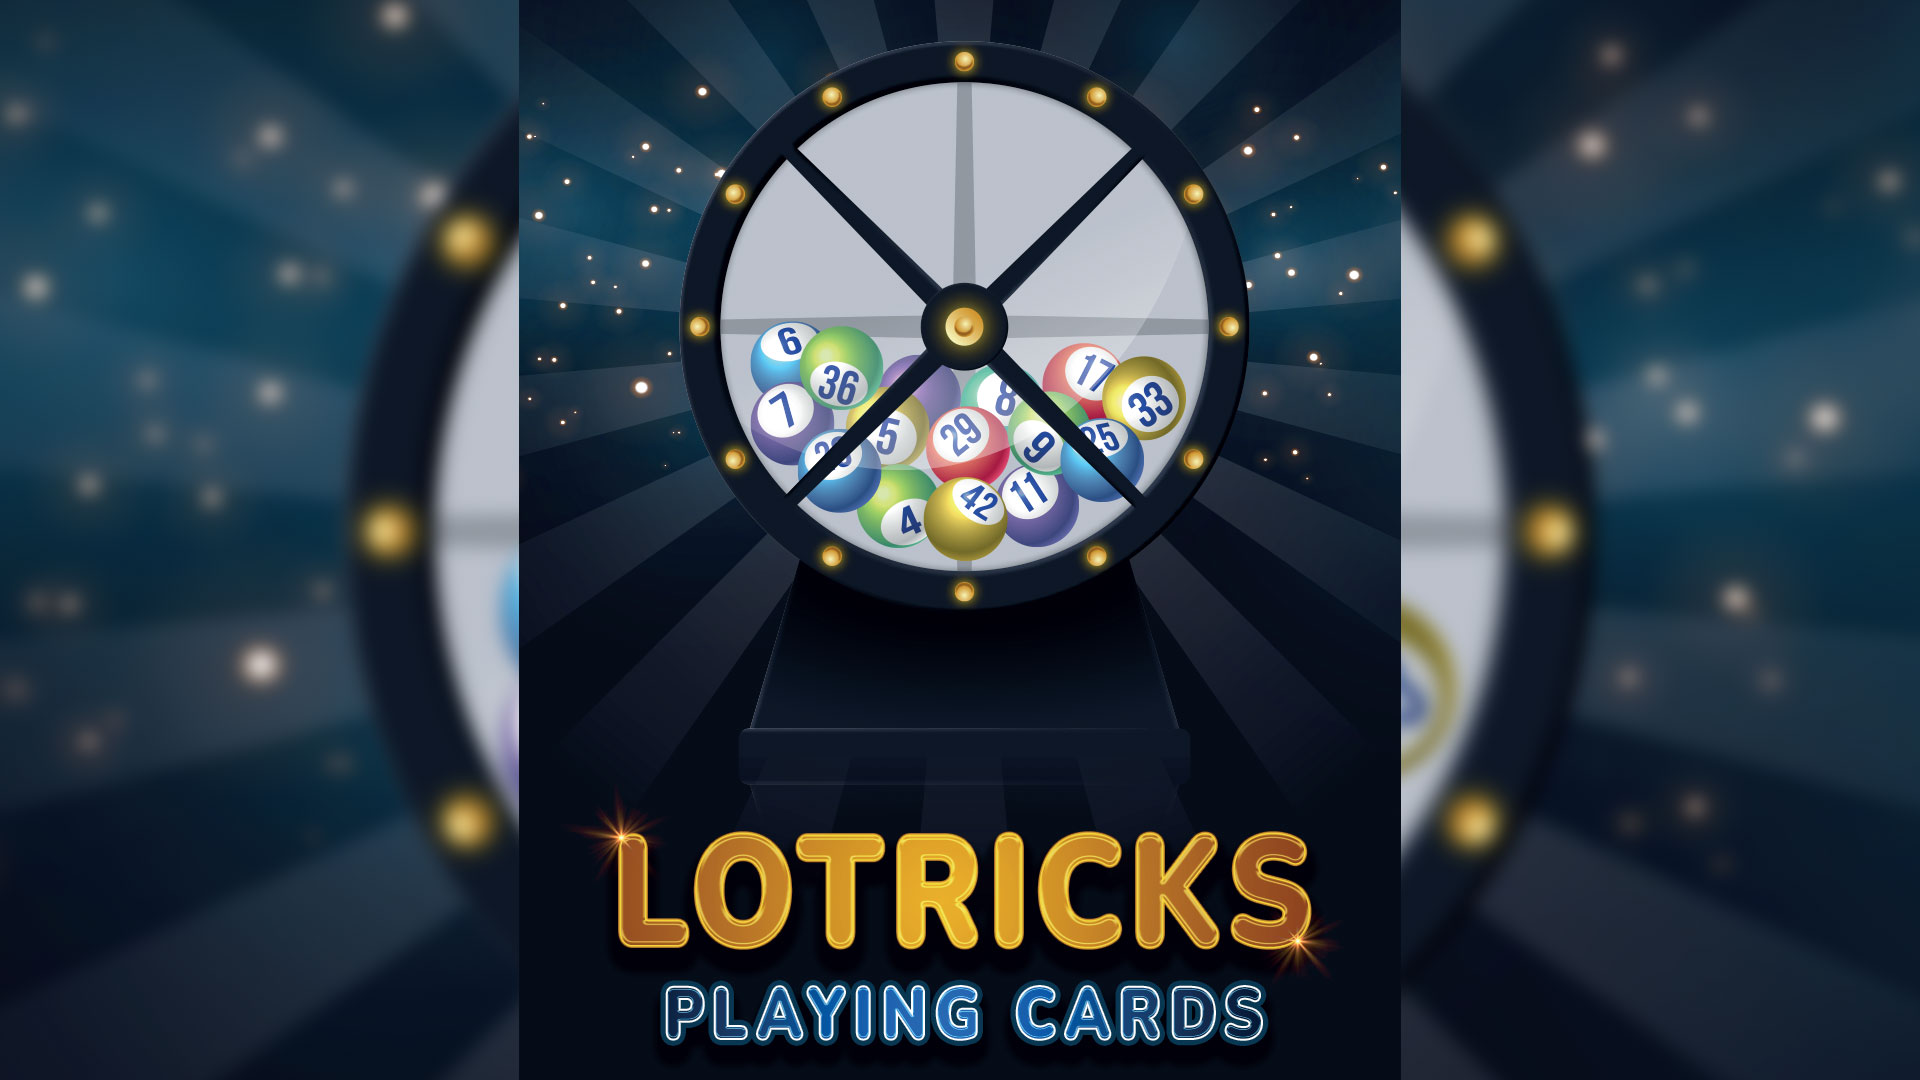 Lotricks by Yoan Tanuji (MP4 Video Download, not in English)